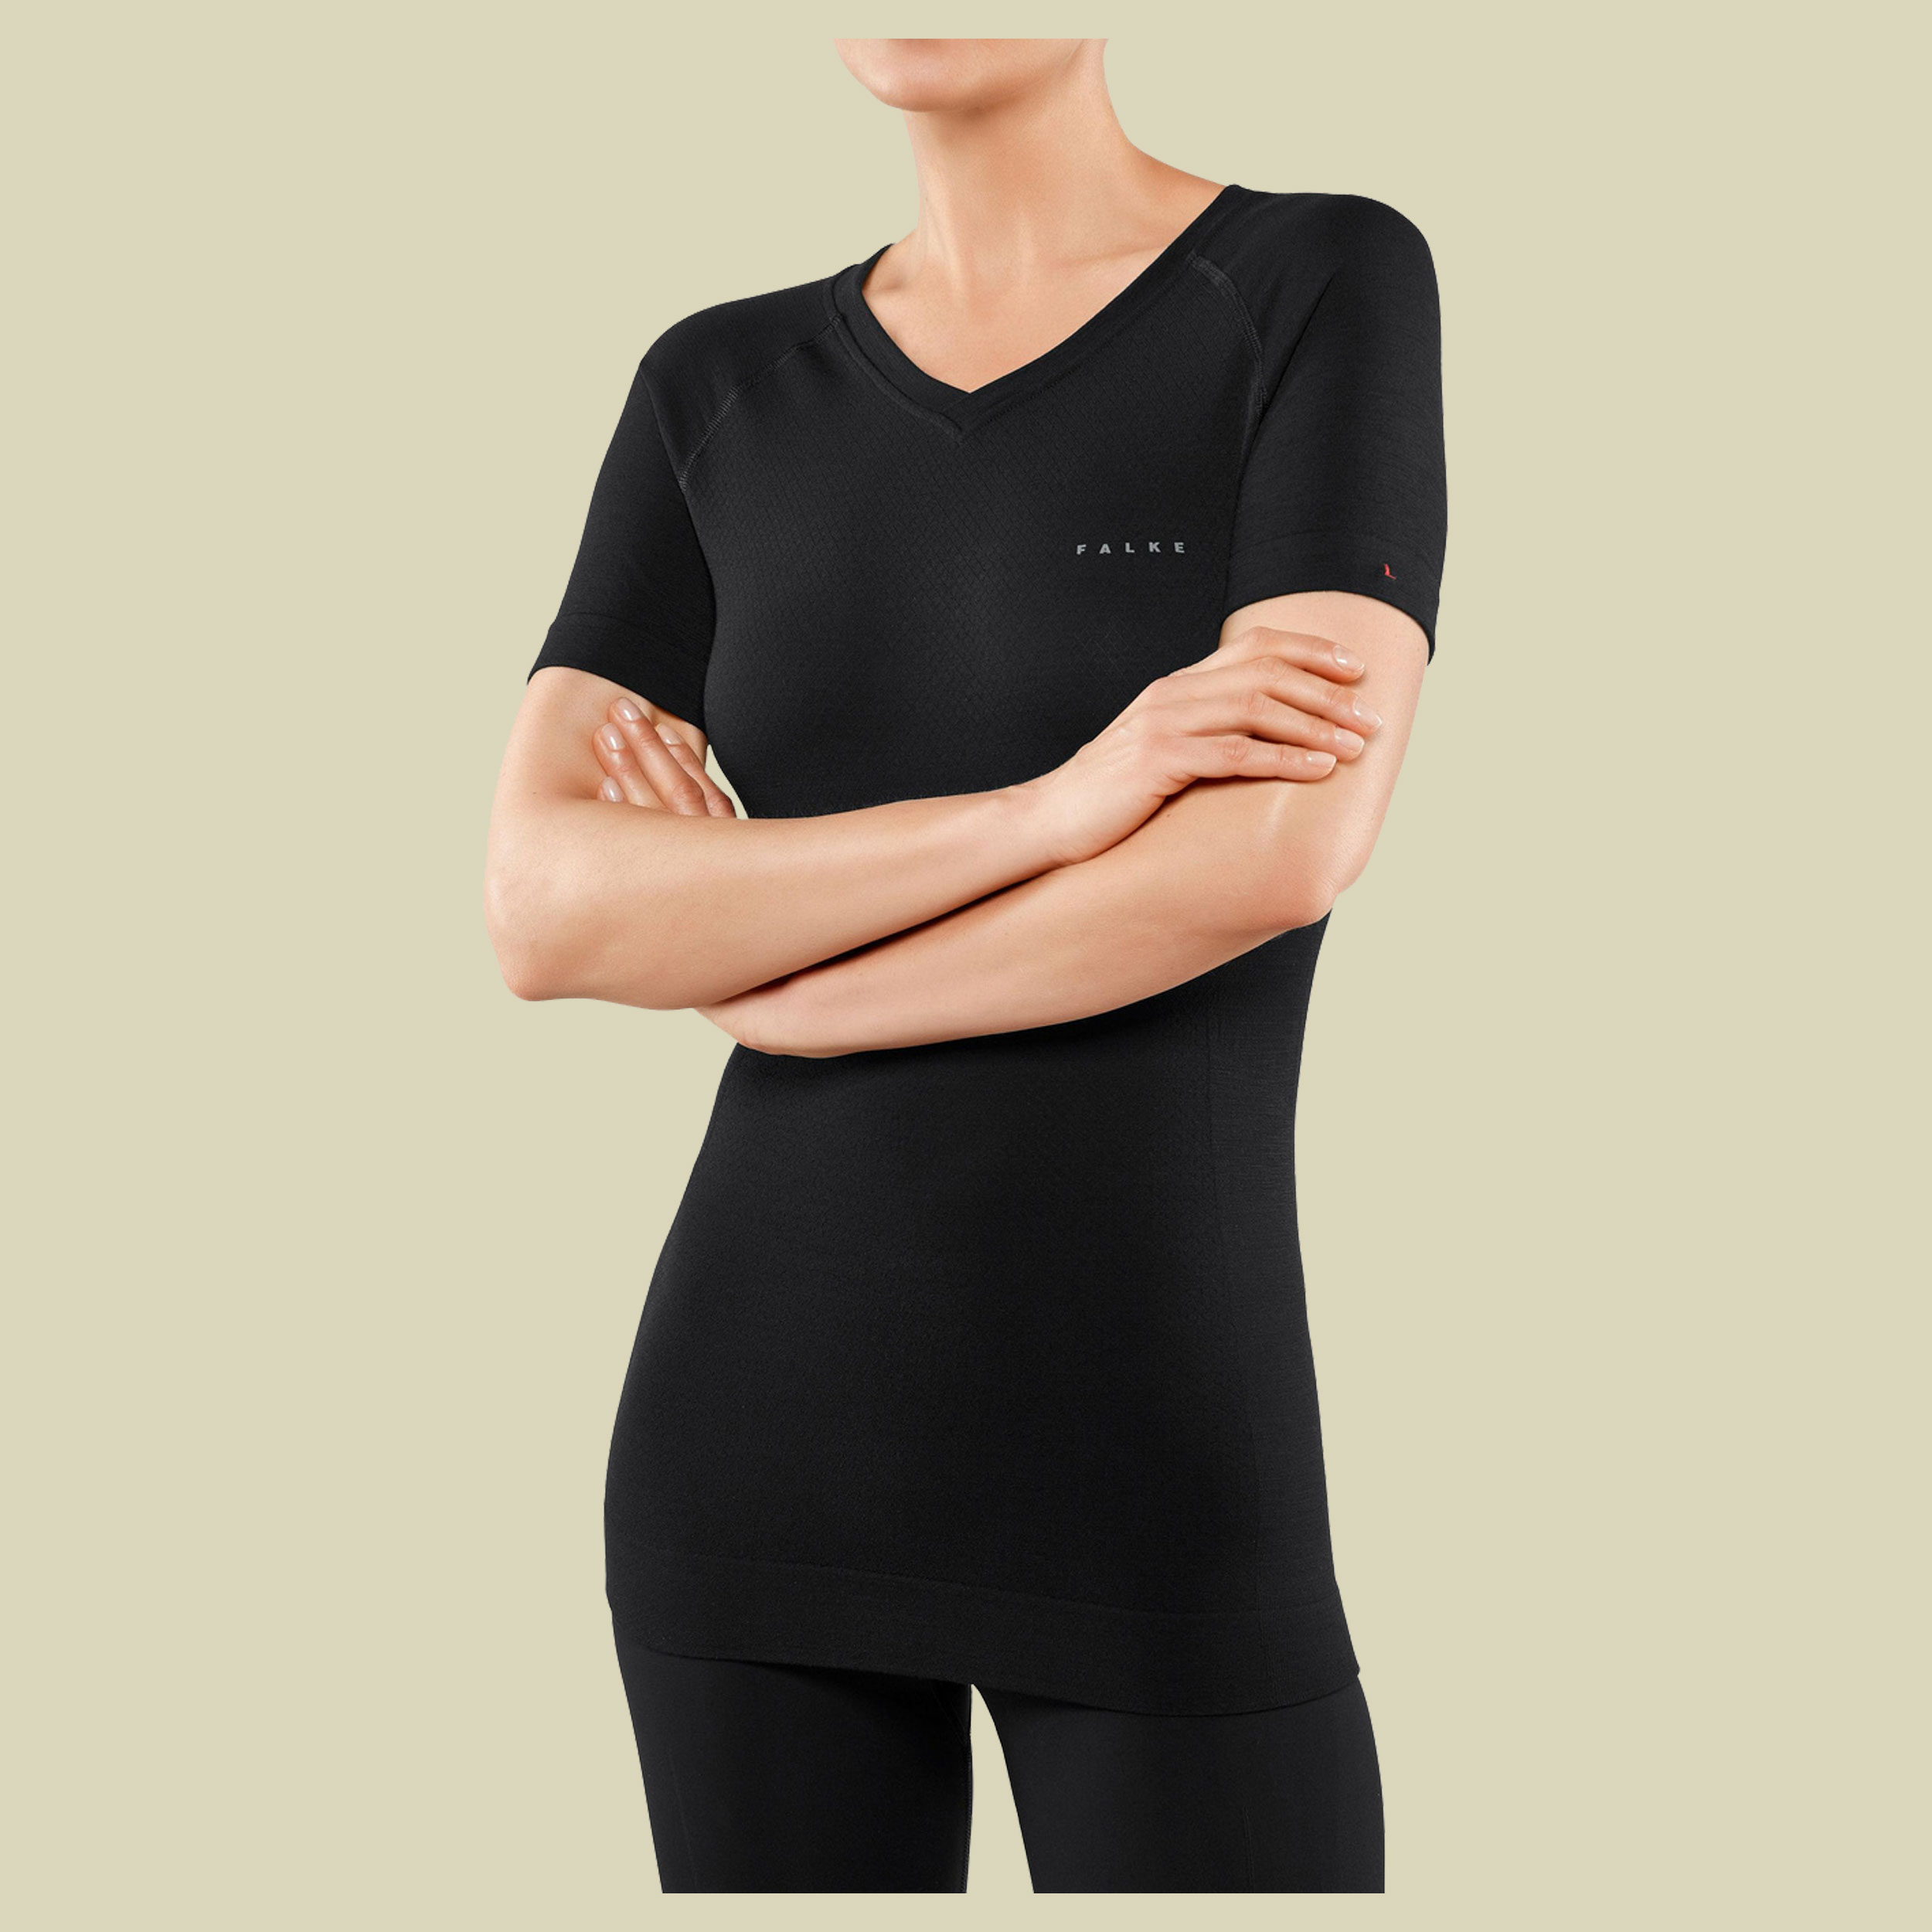 Wool-Tech Light SS Shirt Women Größe L  Farbe black